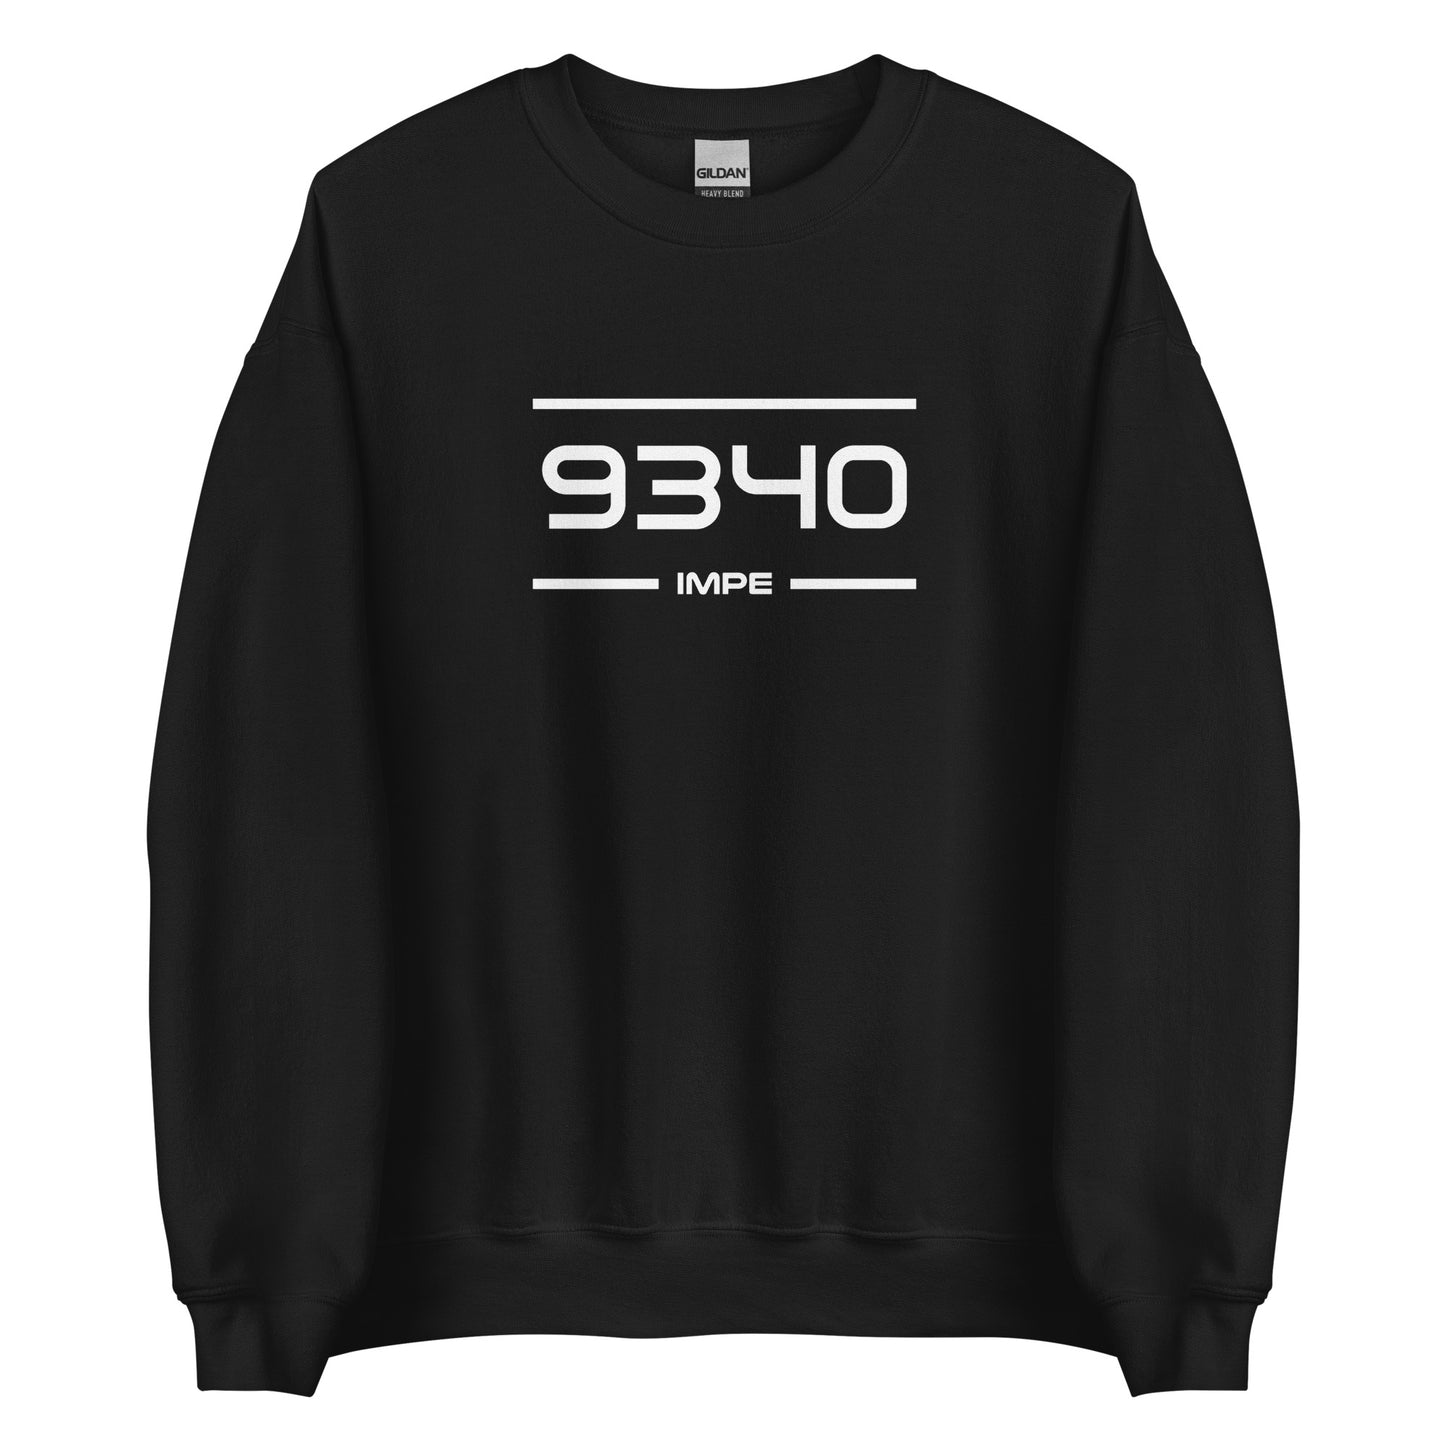 Sweater - 9340 - Impe (M/V)